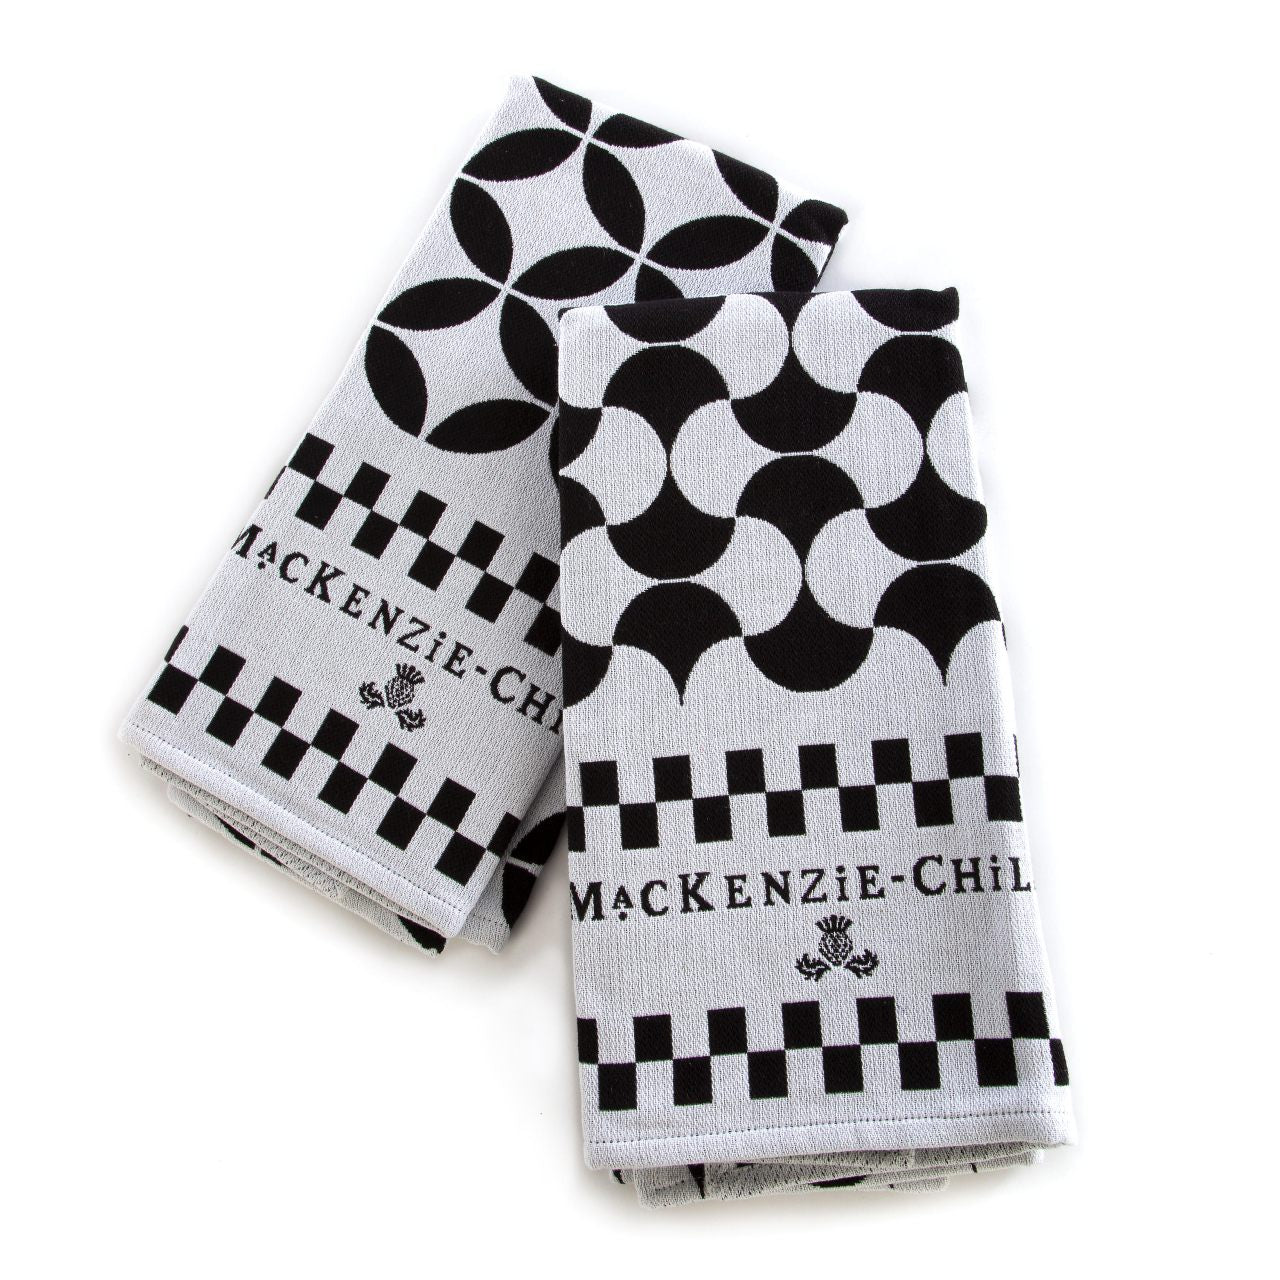 MacKenzie-Childs Black & White Zig Zag Dish Towels - Set of 3